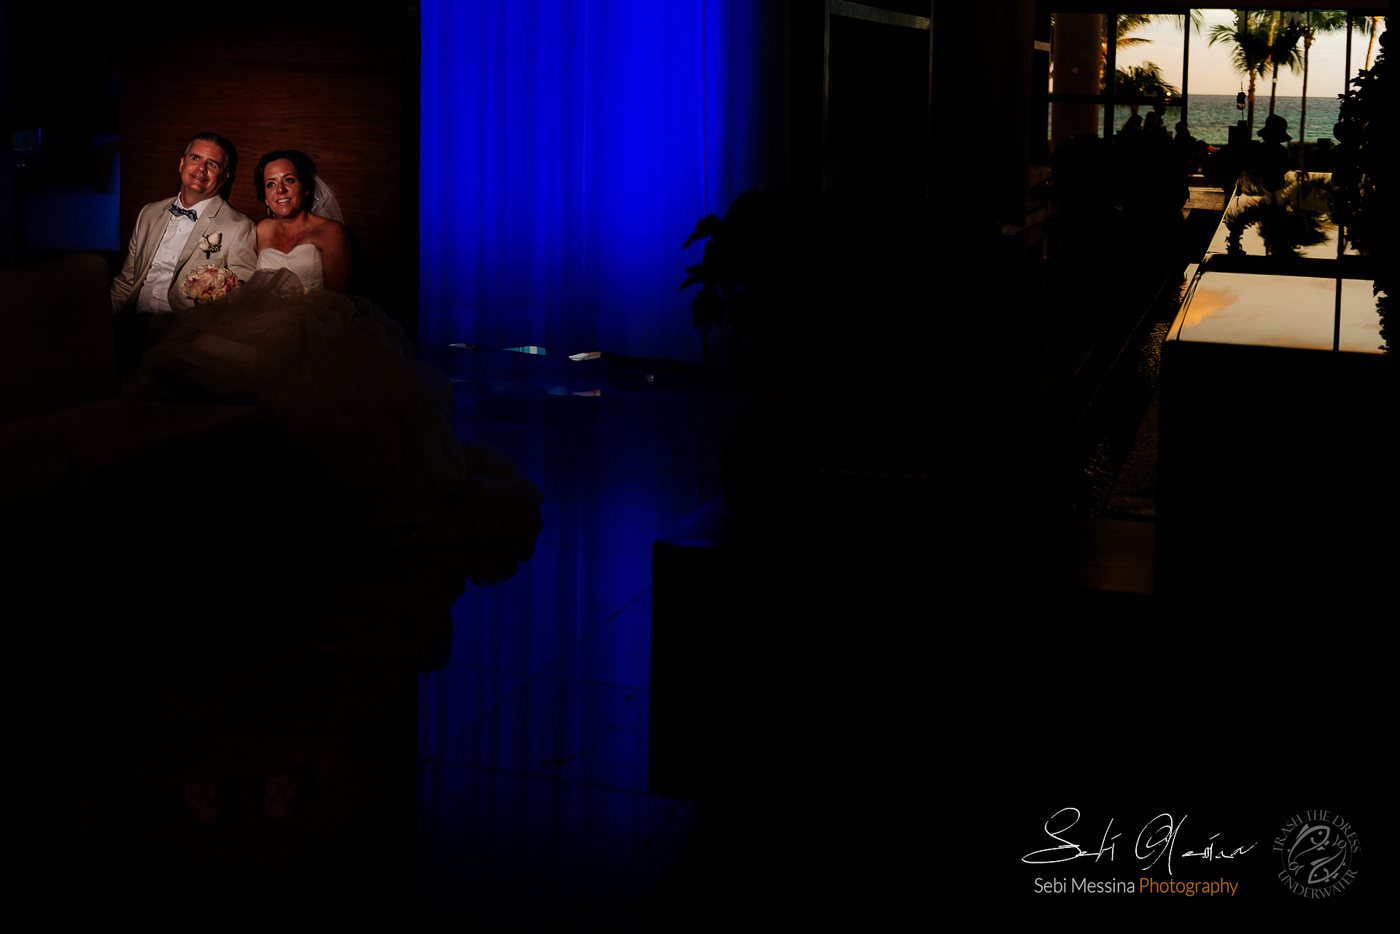 Now Jade Wedding - Sebi Messina Photography